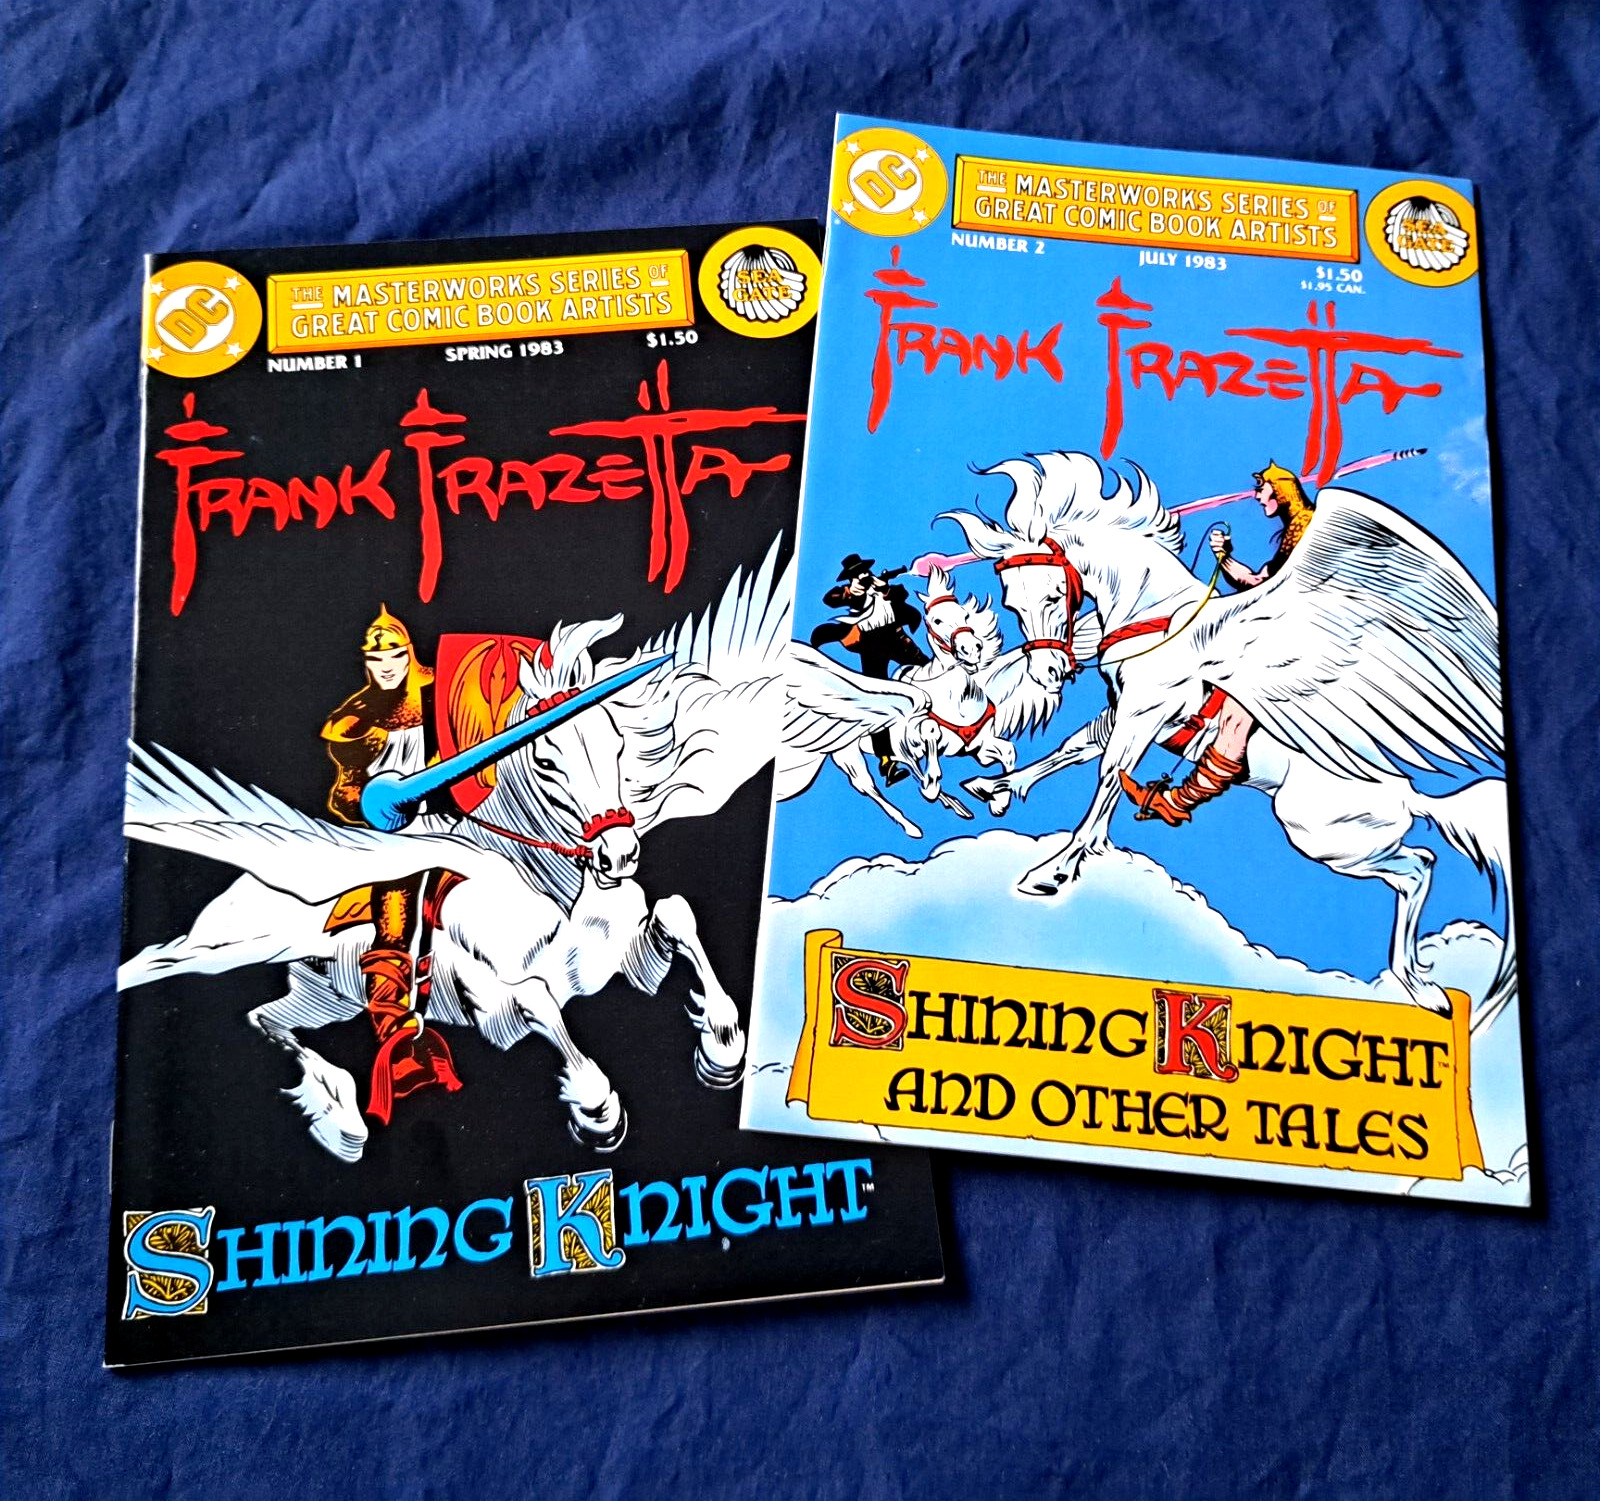 1983 DC Masterworks Series, Frank Frazetta #1,#2, Lot of 2, NM or better.